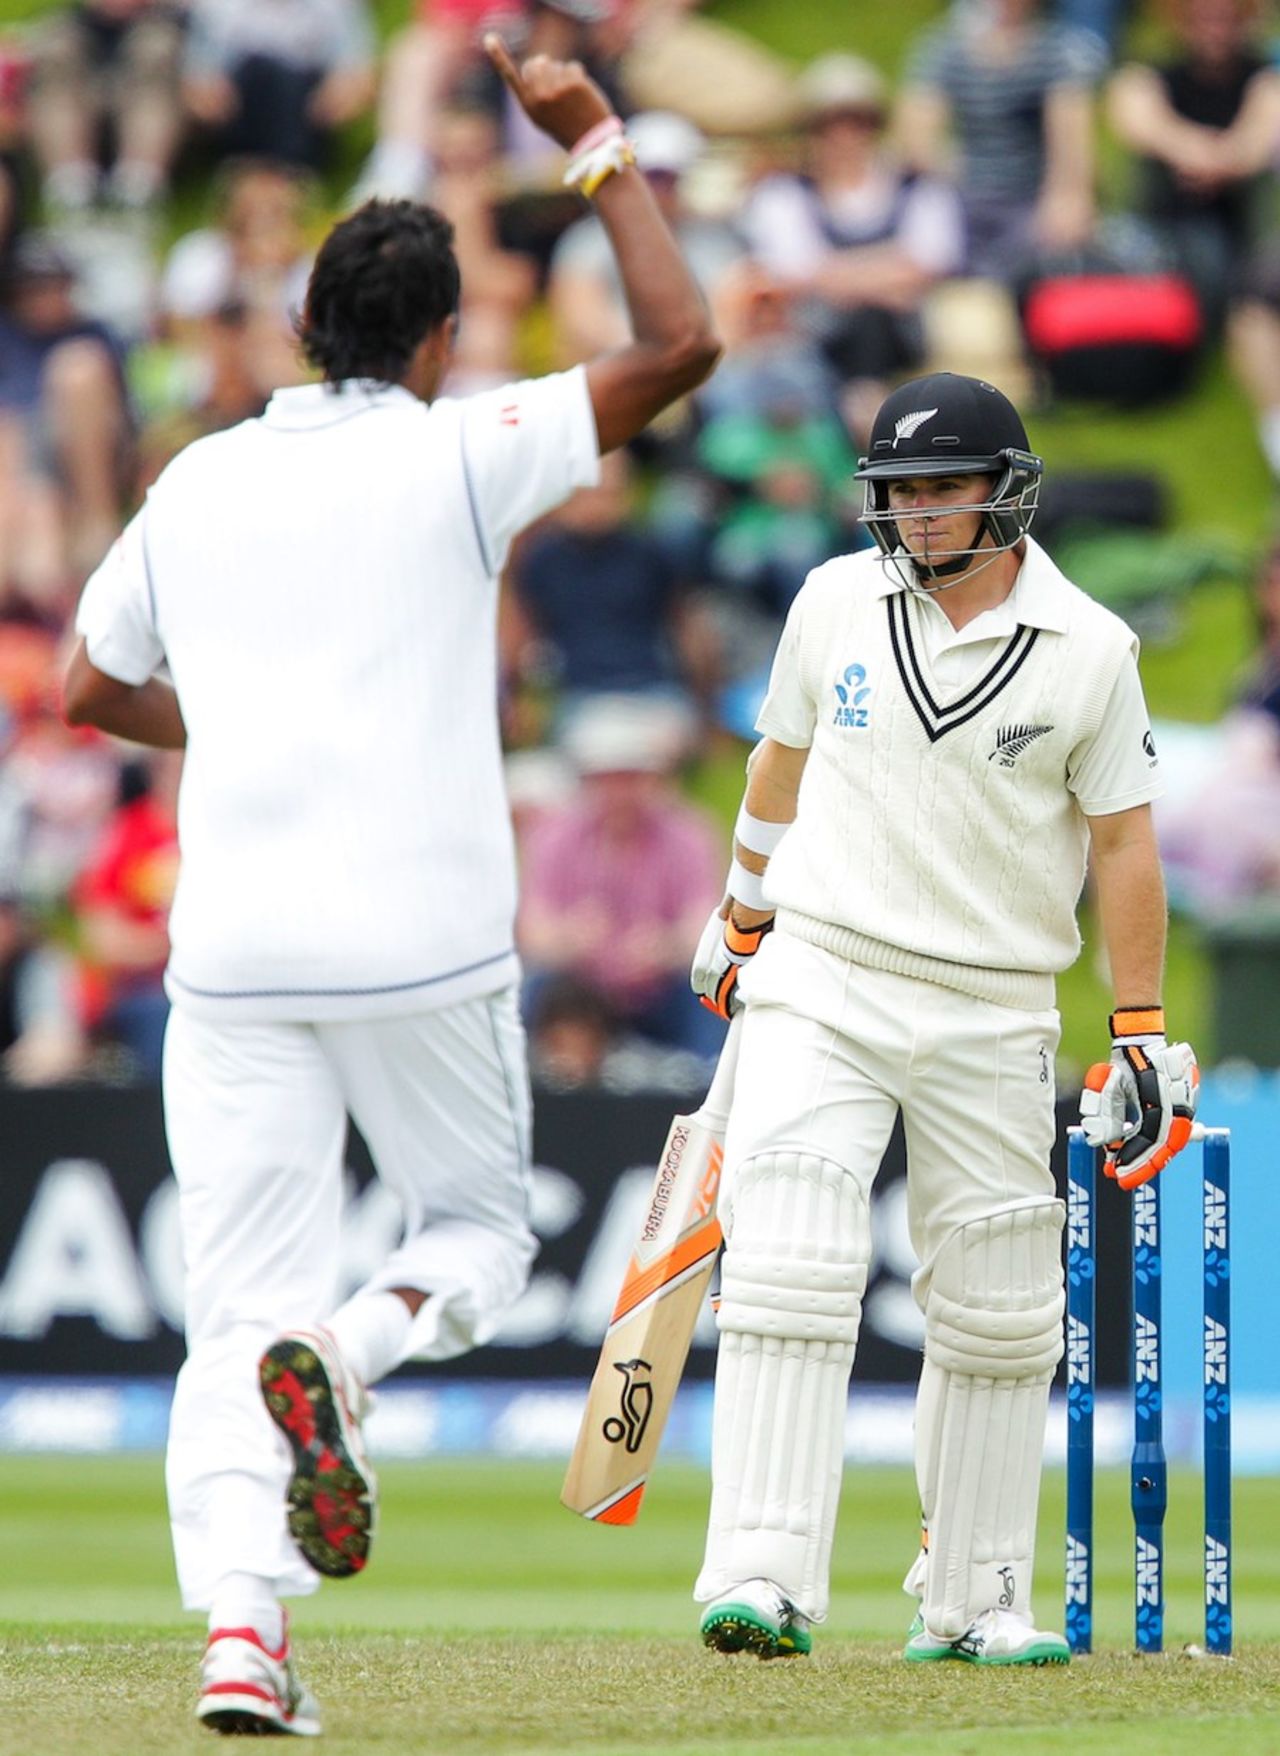 Tom Latham was caught behind for 6, New Zealand v Sri Lanka, 2nd Test, Wellington, 1st day, January 3, 2015